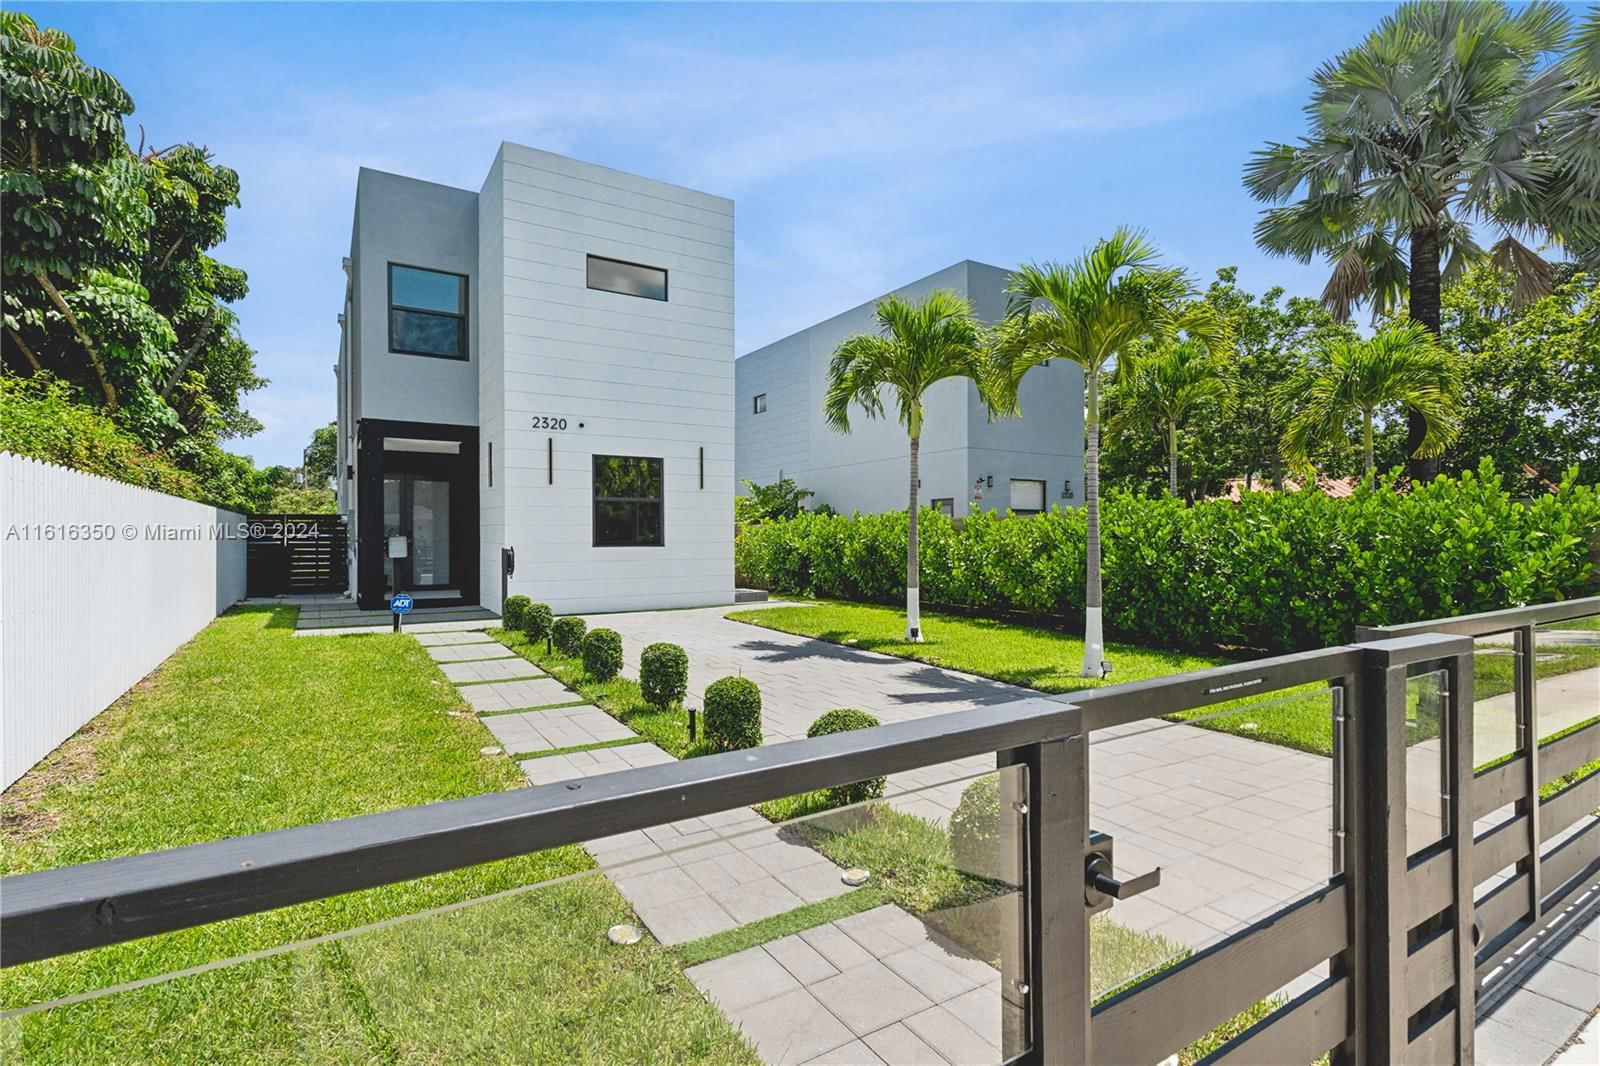 Real estate property located at 2320 14th St, Miami-Dade County, GRAPELAND, Miami, FL